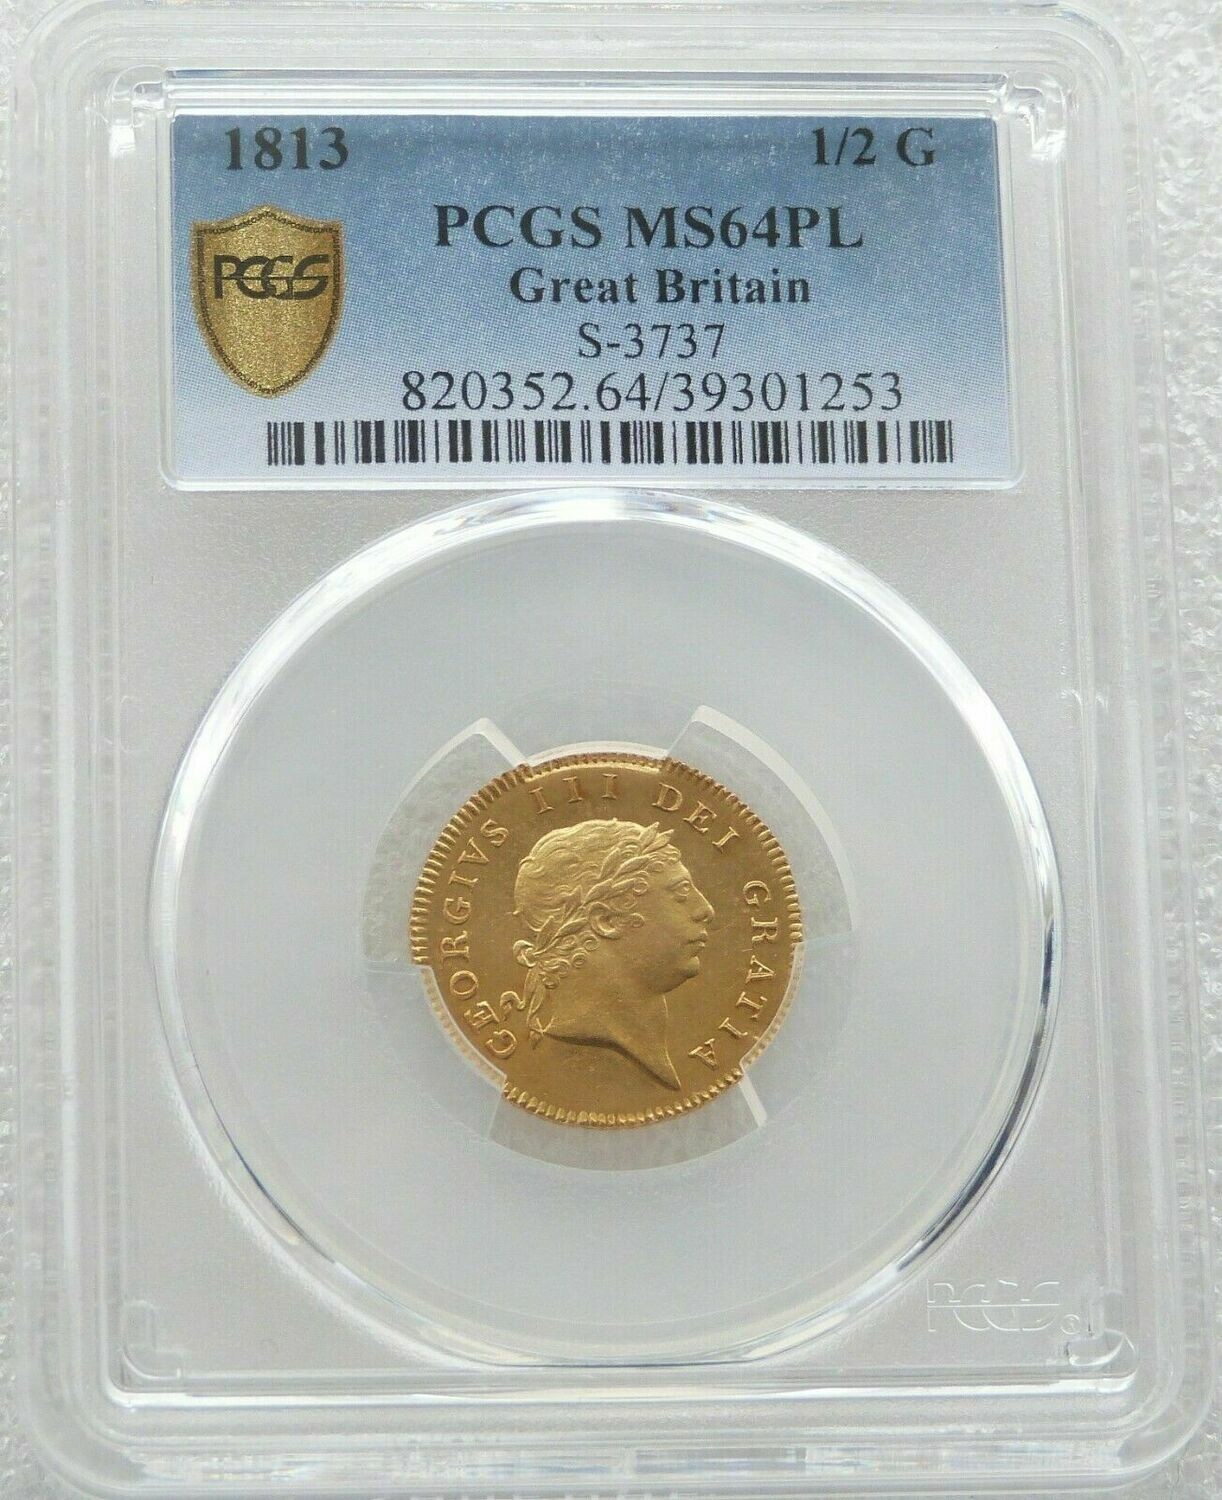 1813 George III Seventh Laur Head Half Guinea Gold Coin PCGS MS64 PL